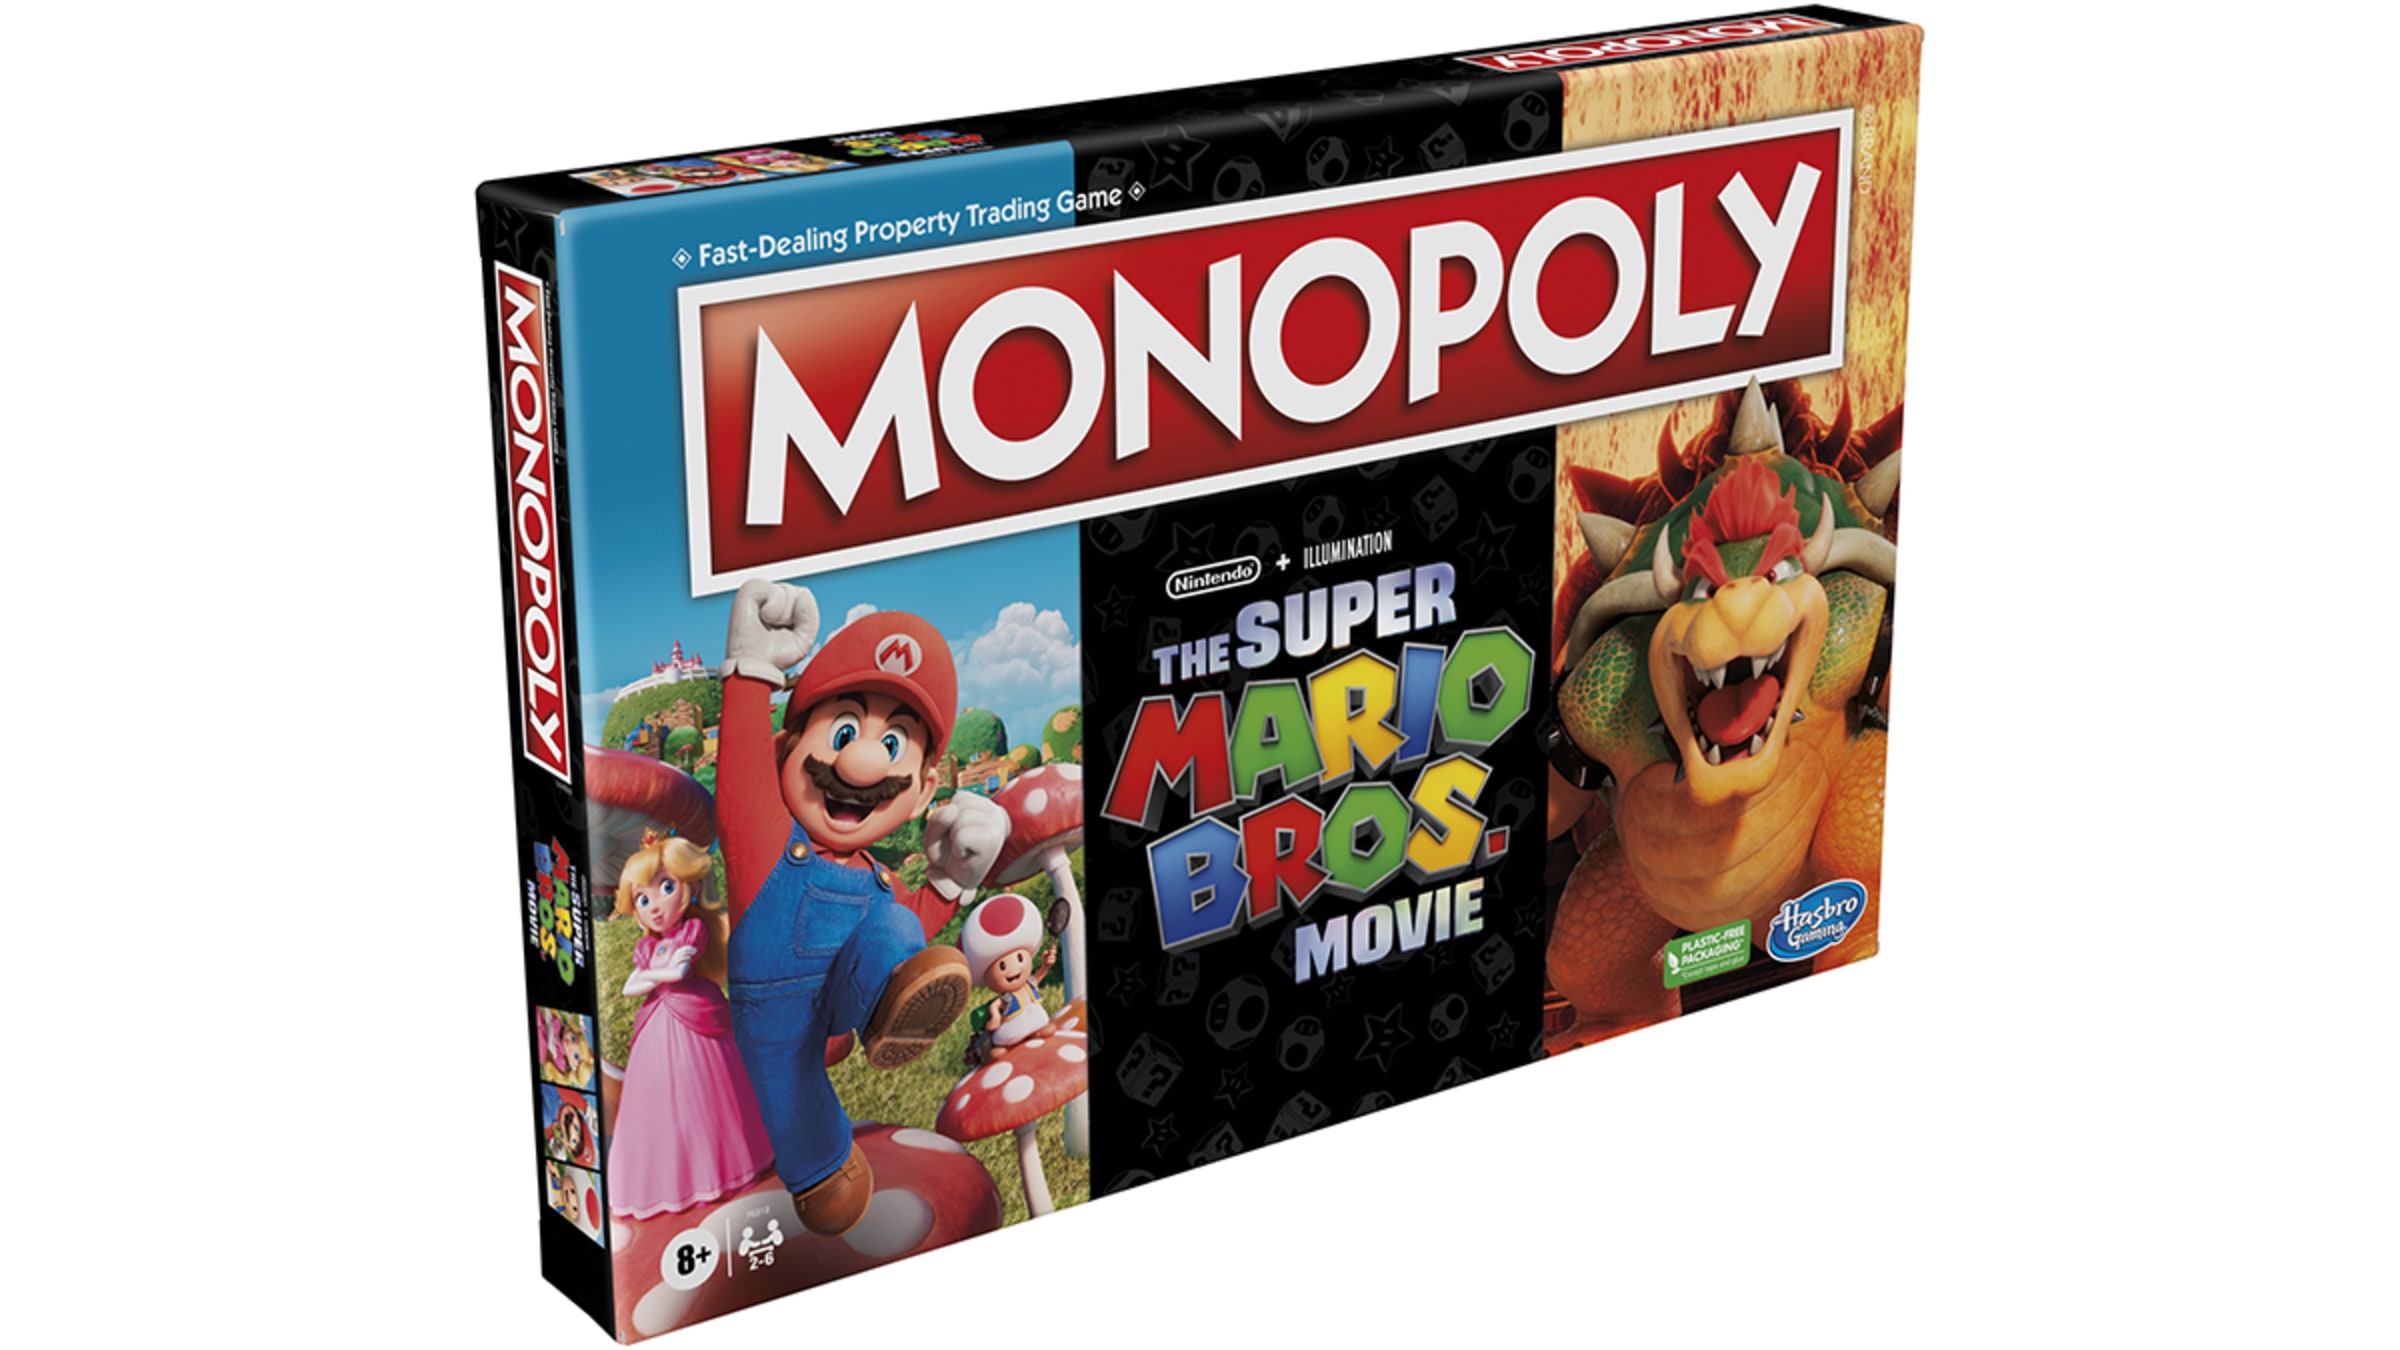 Monopoly Releases 'The Super Mario Bros. Movie' Edition